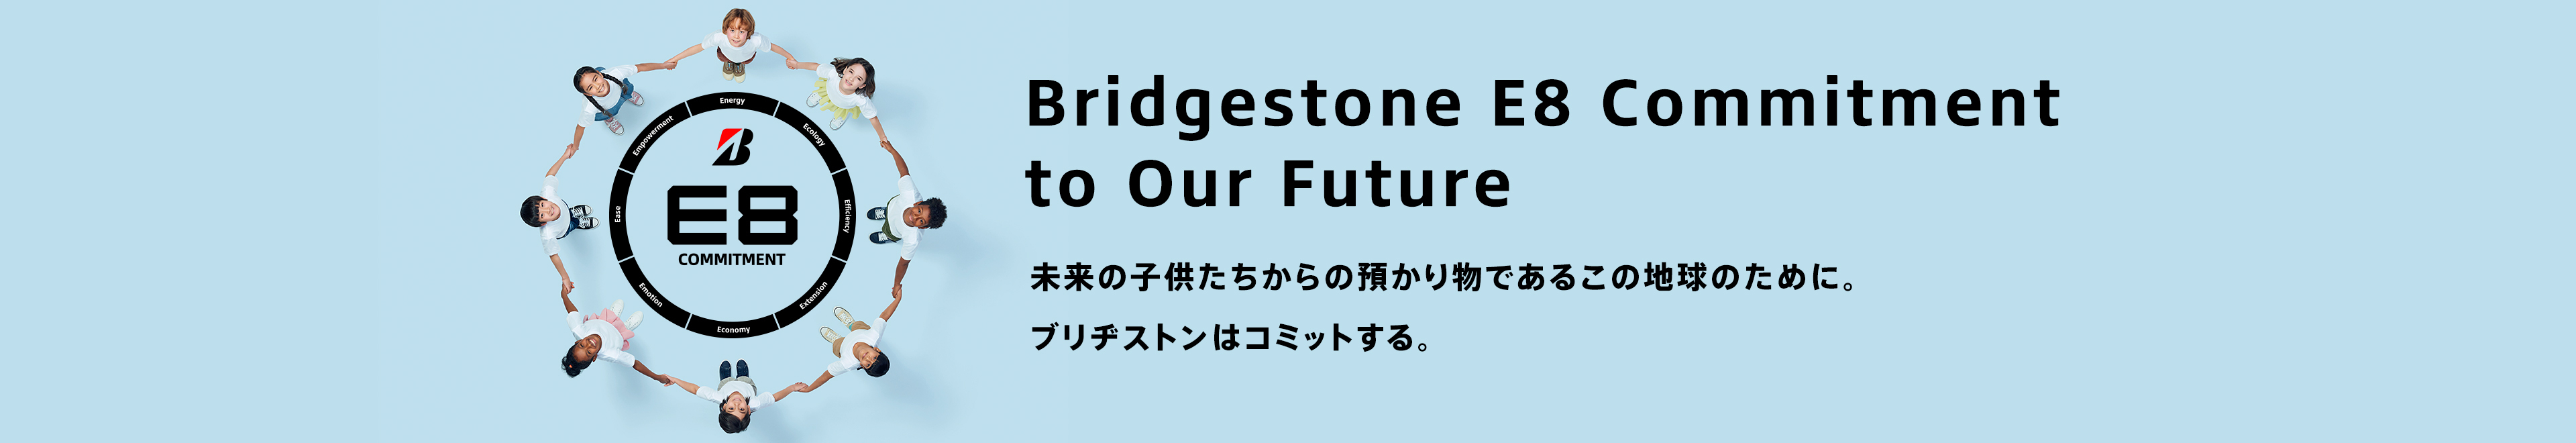 Bridgestone E8 Commitment to Our Future　未来の子供たちからの預かり物であるこの地球のために。ブリヂストンはコミットする。